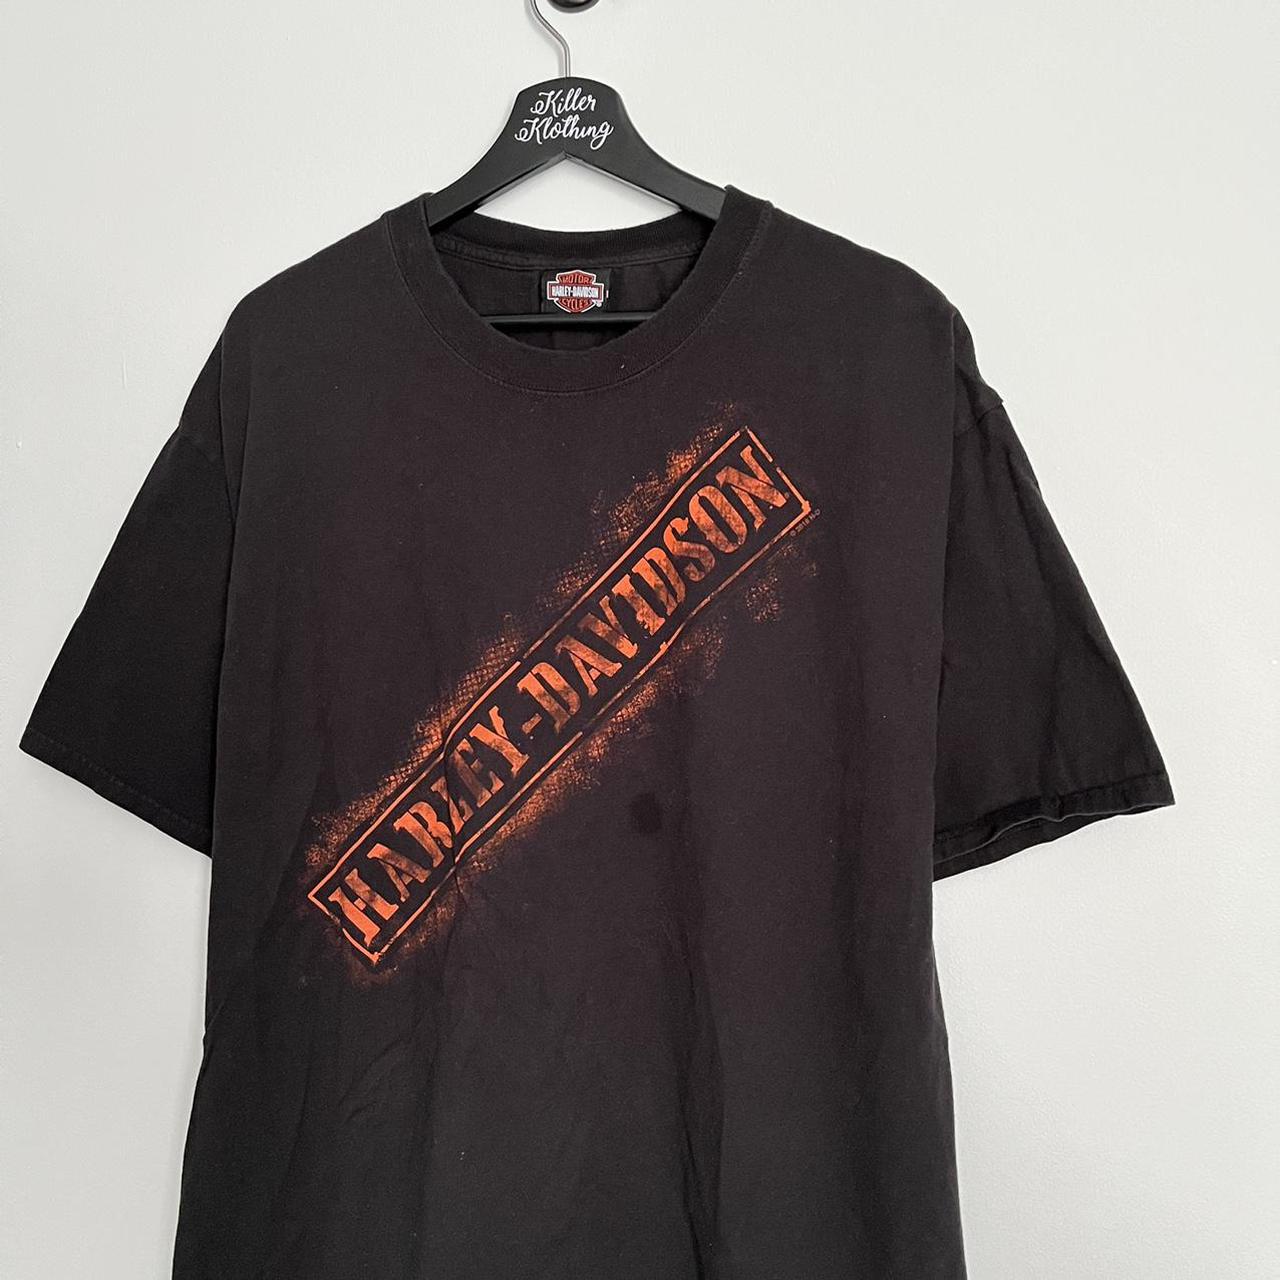 Harley Davidson Women's Black and Orange T-shirt (2)